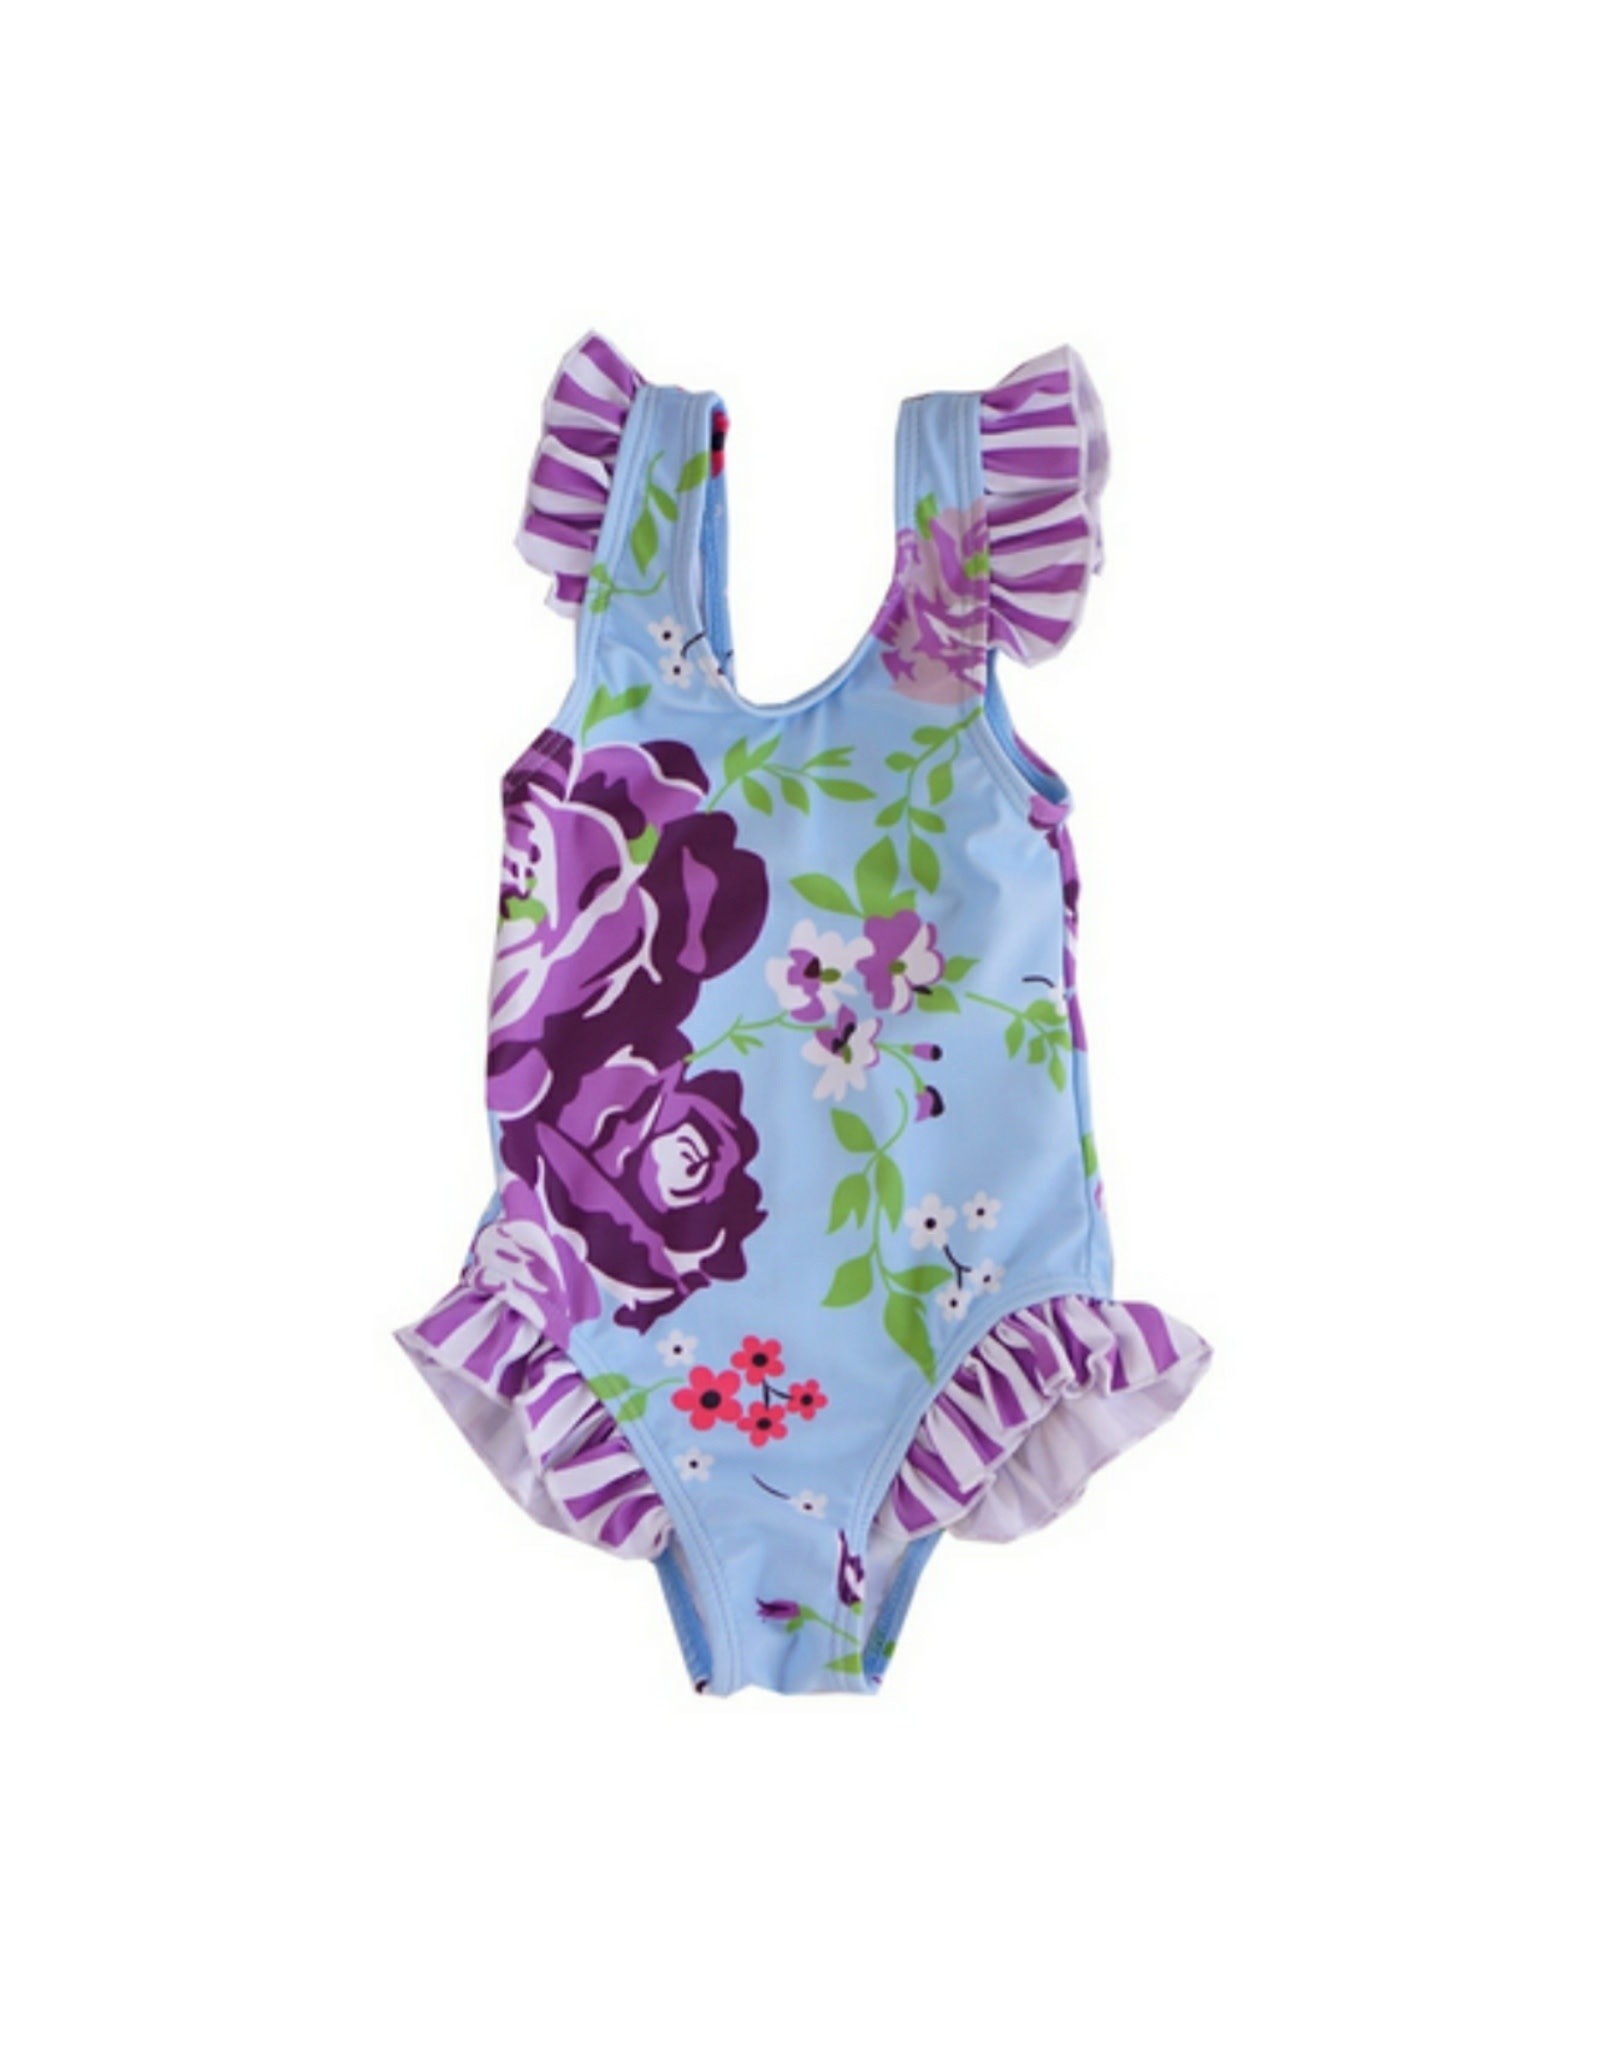 Blue floral girls ruffle swim suit - Crafty Shack of Ascension LLC